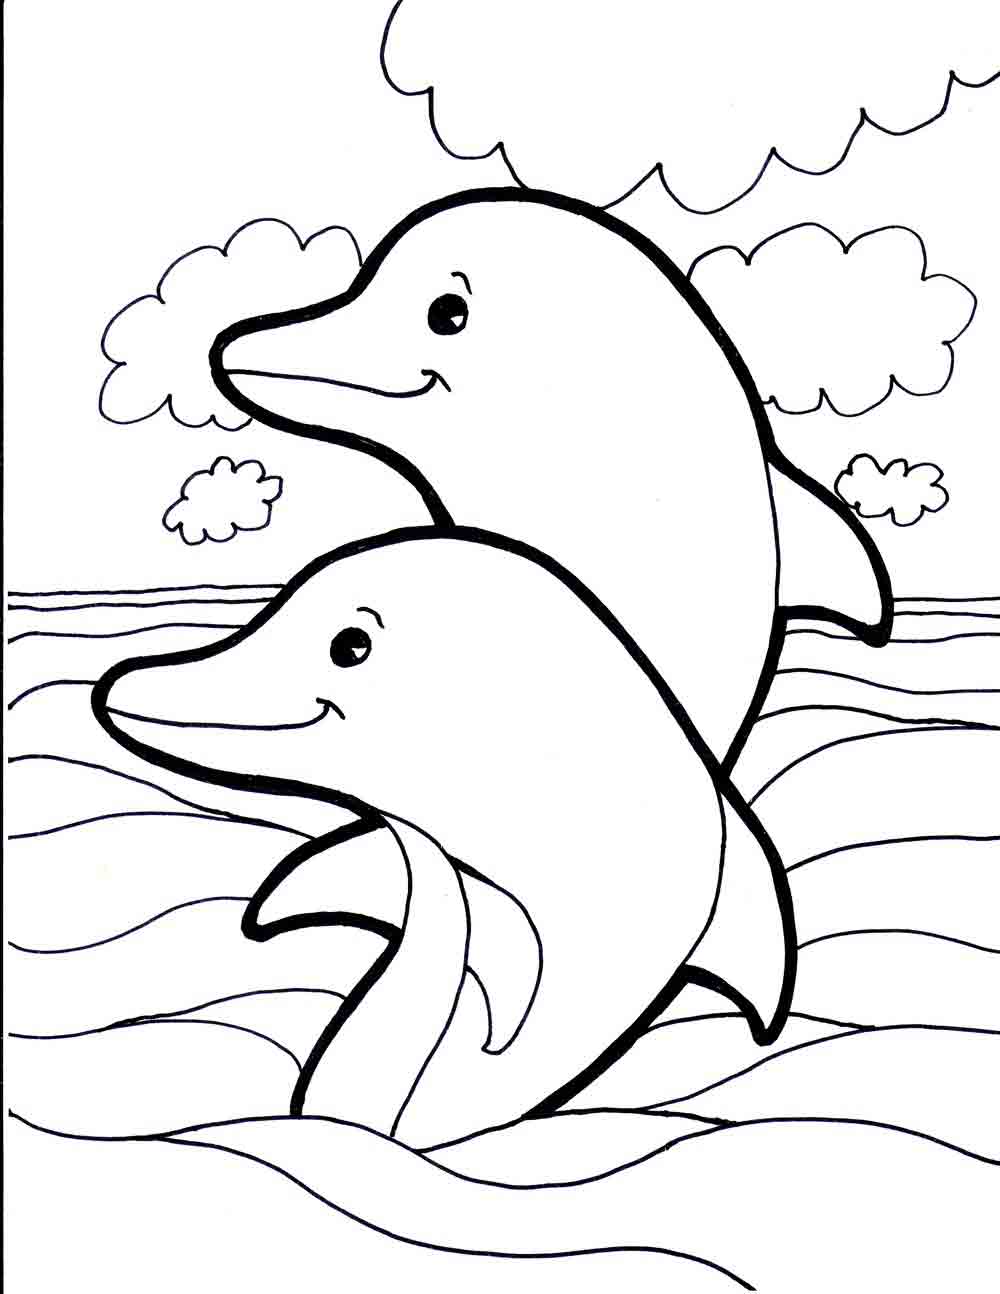 Gambar Lumba Dolphin 19 Alamendah Blog Gambar Sketsa Fauna Flora